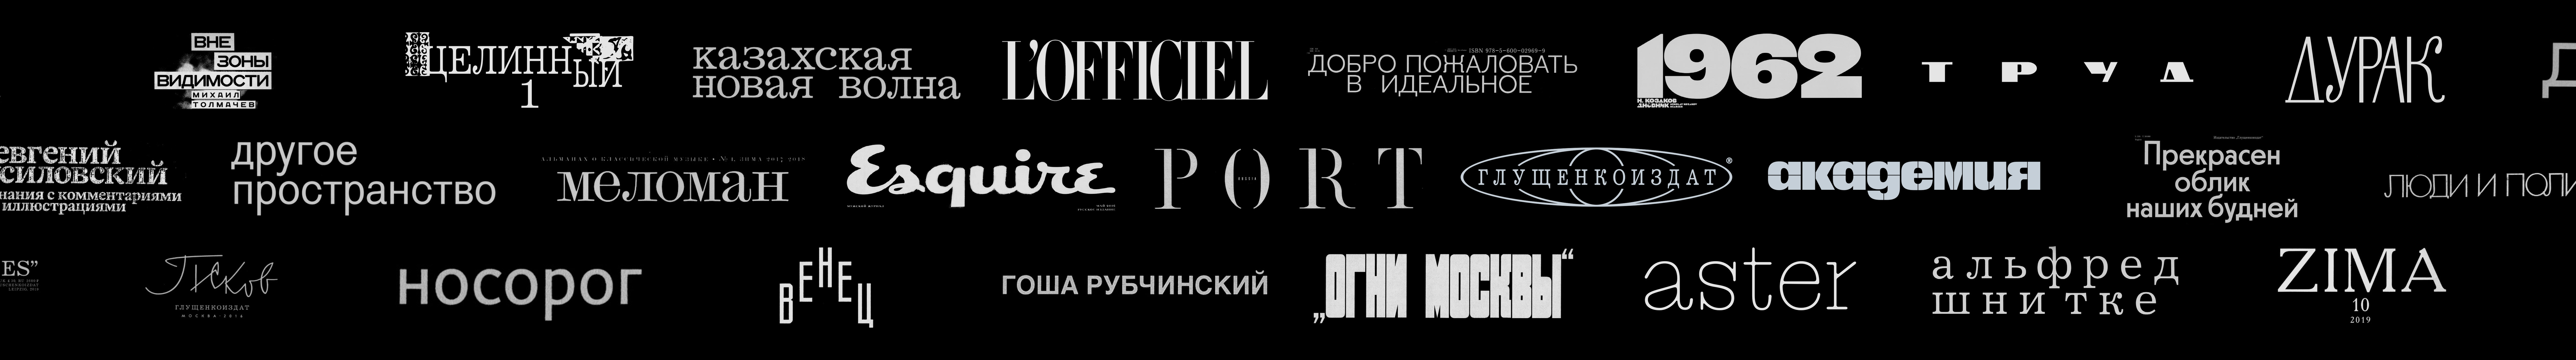 Banner de perfil de Kirill Gluschenko